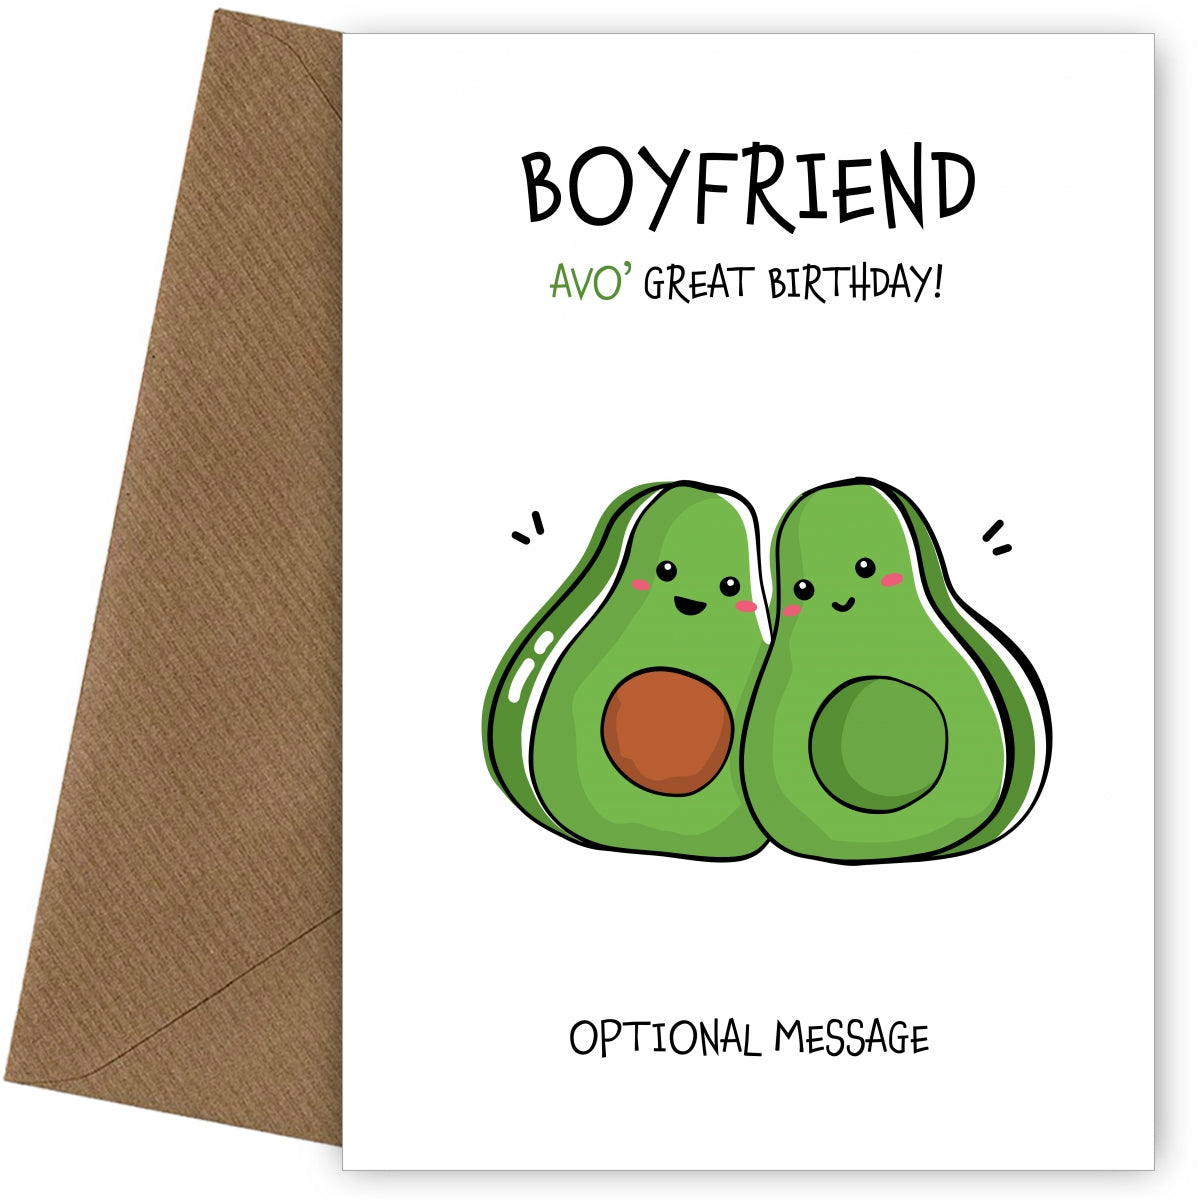 Avocado Birthday Card for Boyfriend